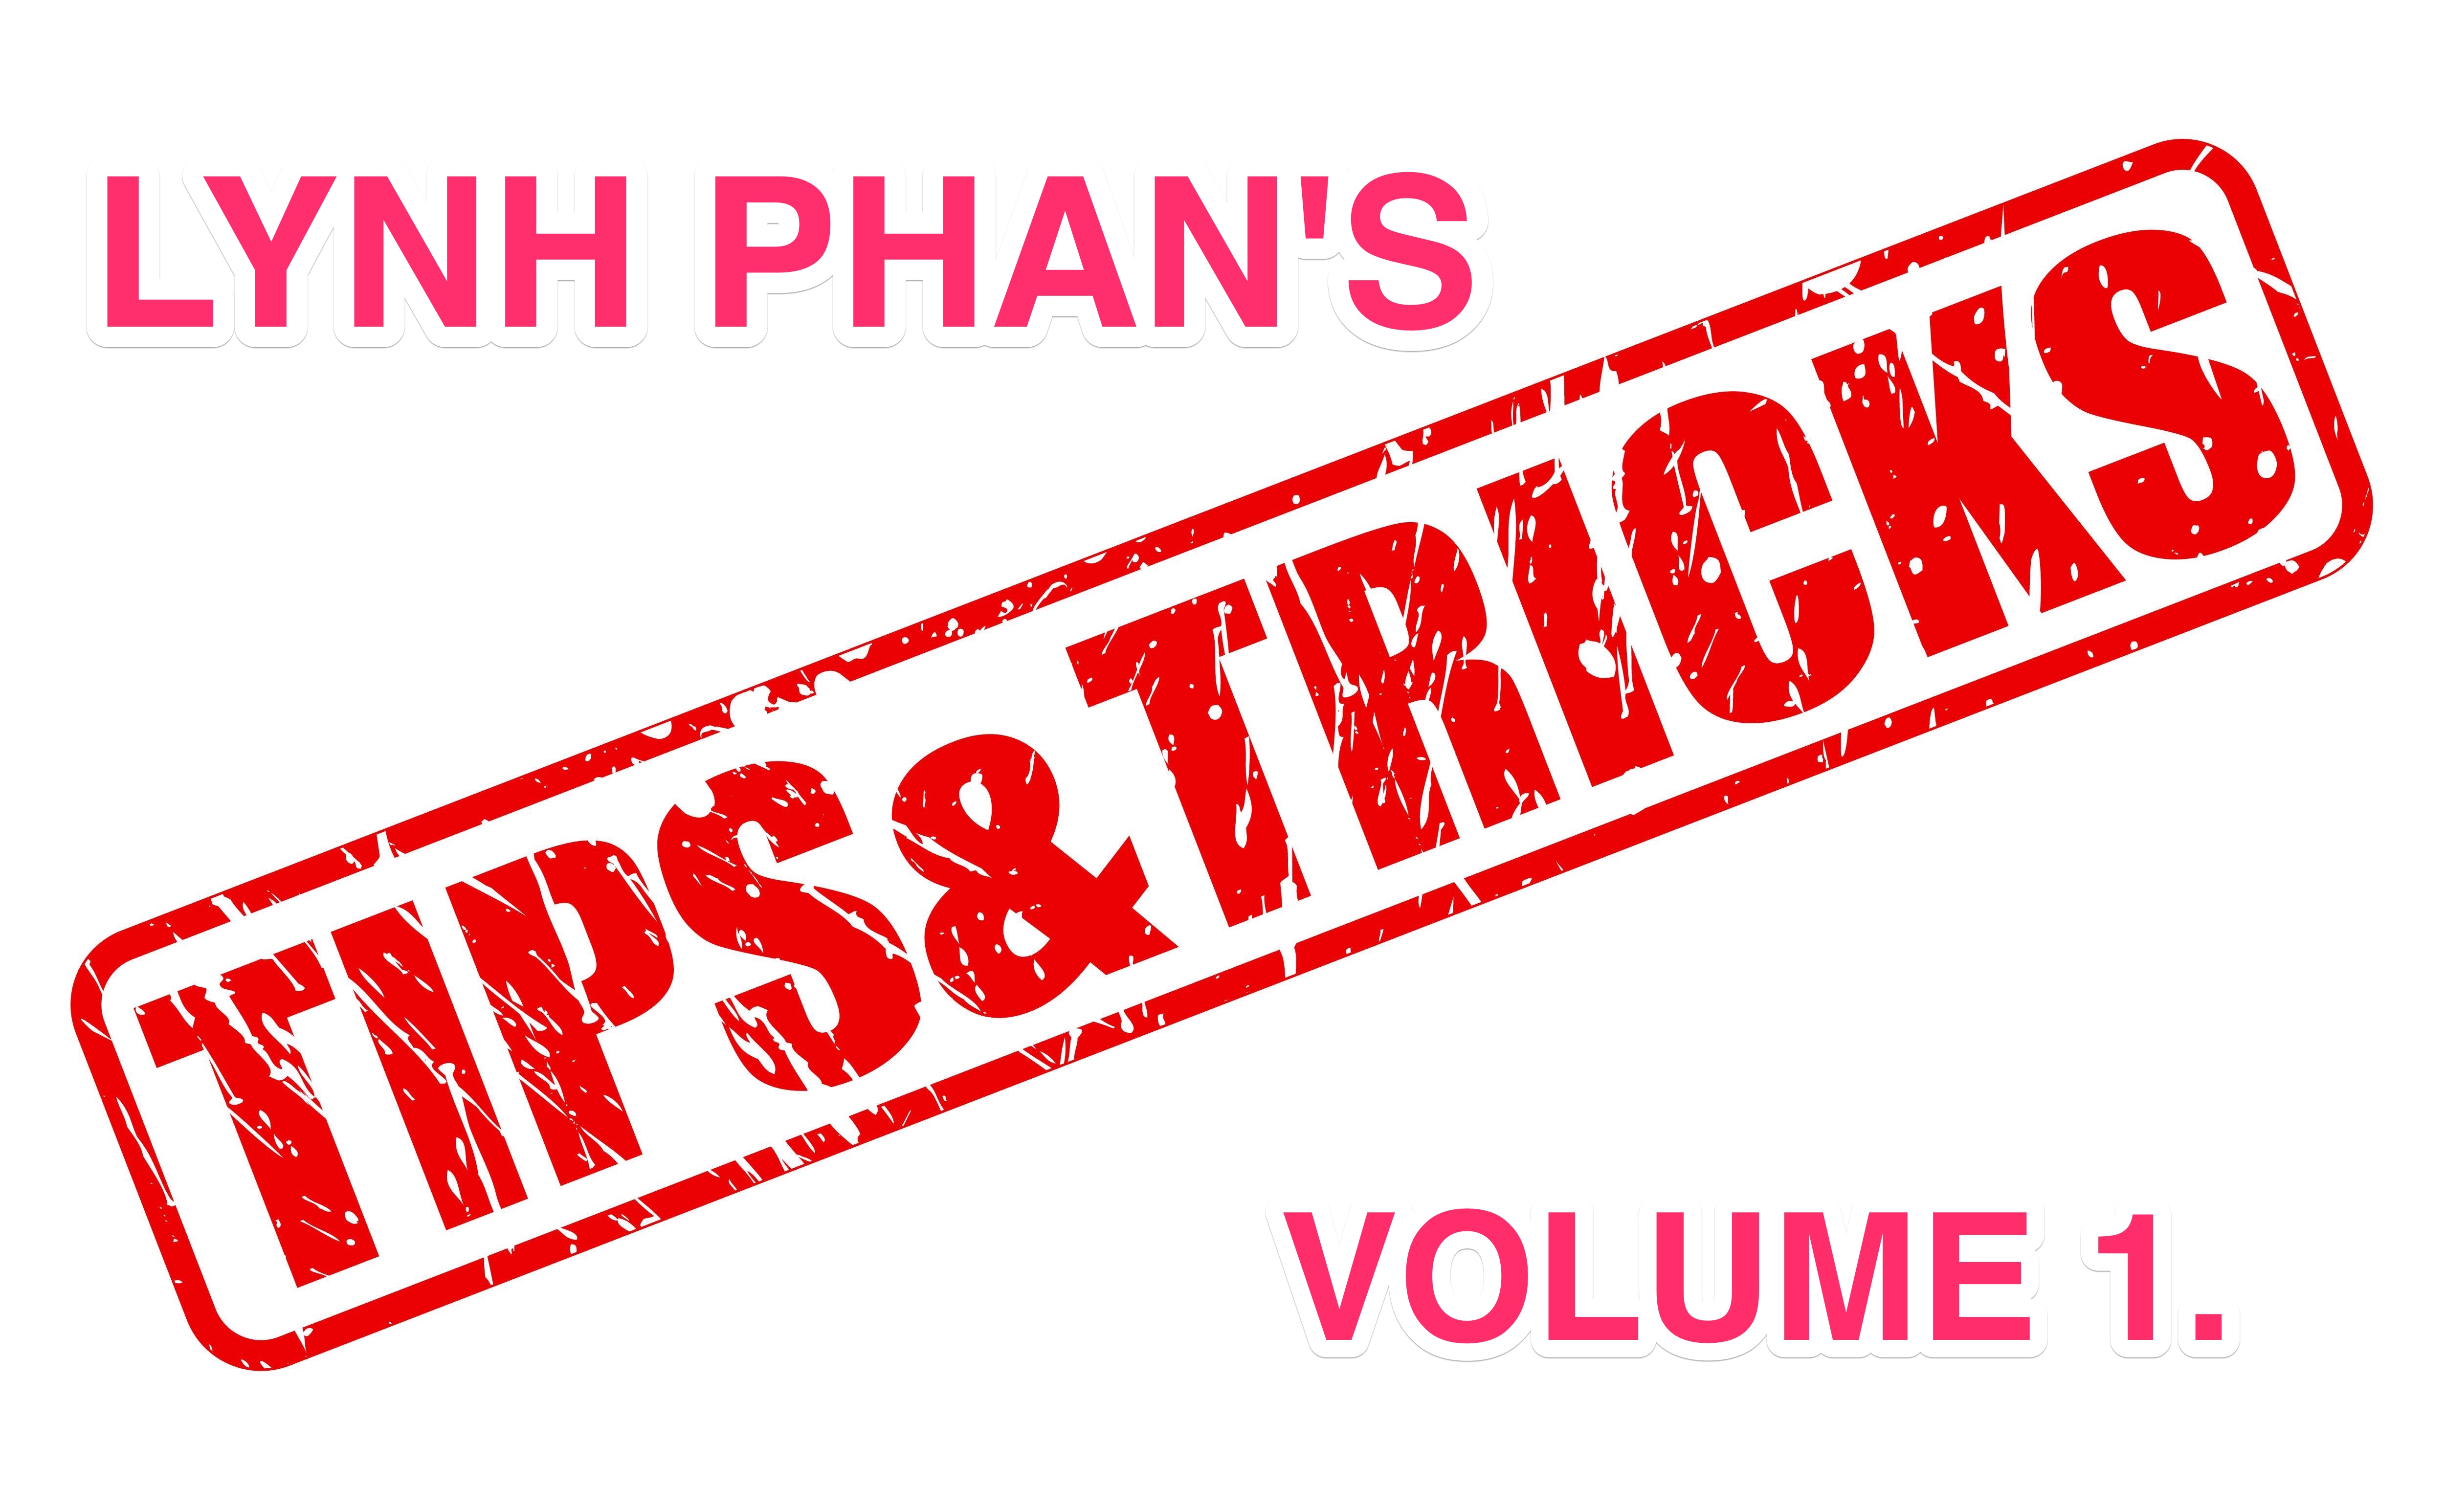 Lynh Phan's DJI Inspire 1 Tips Compilation Vol. 1.